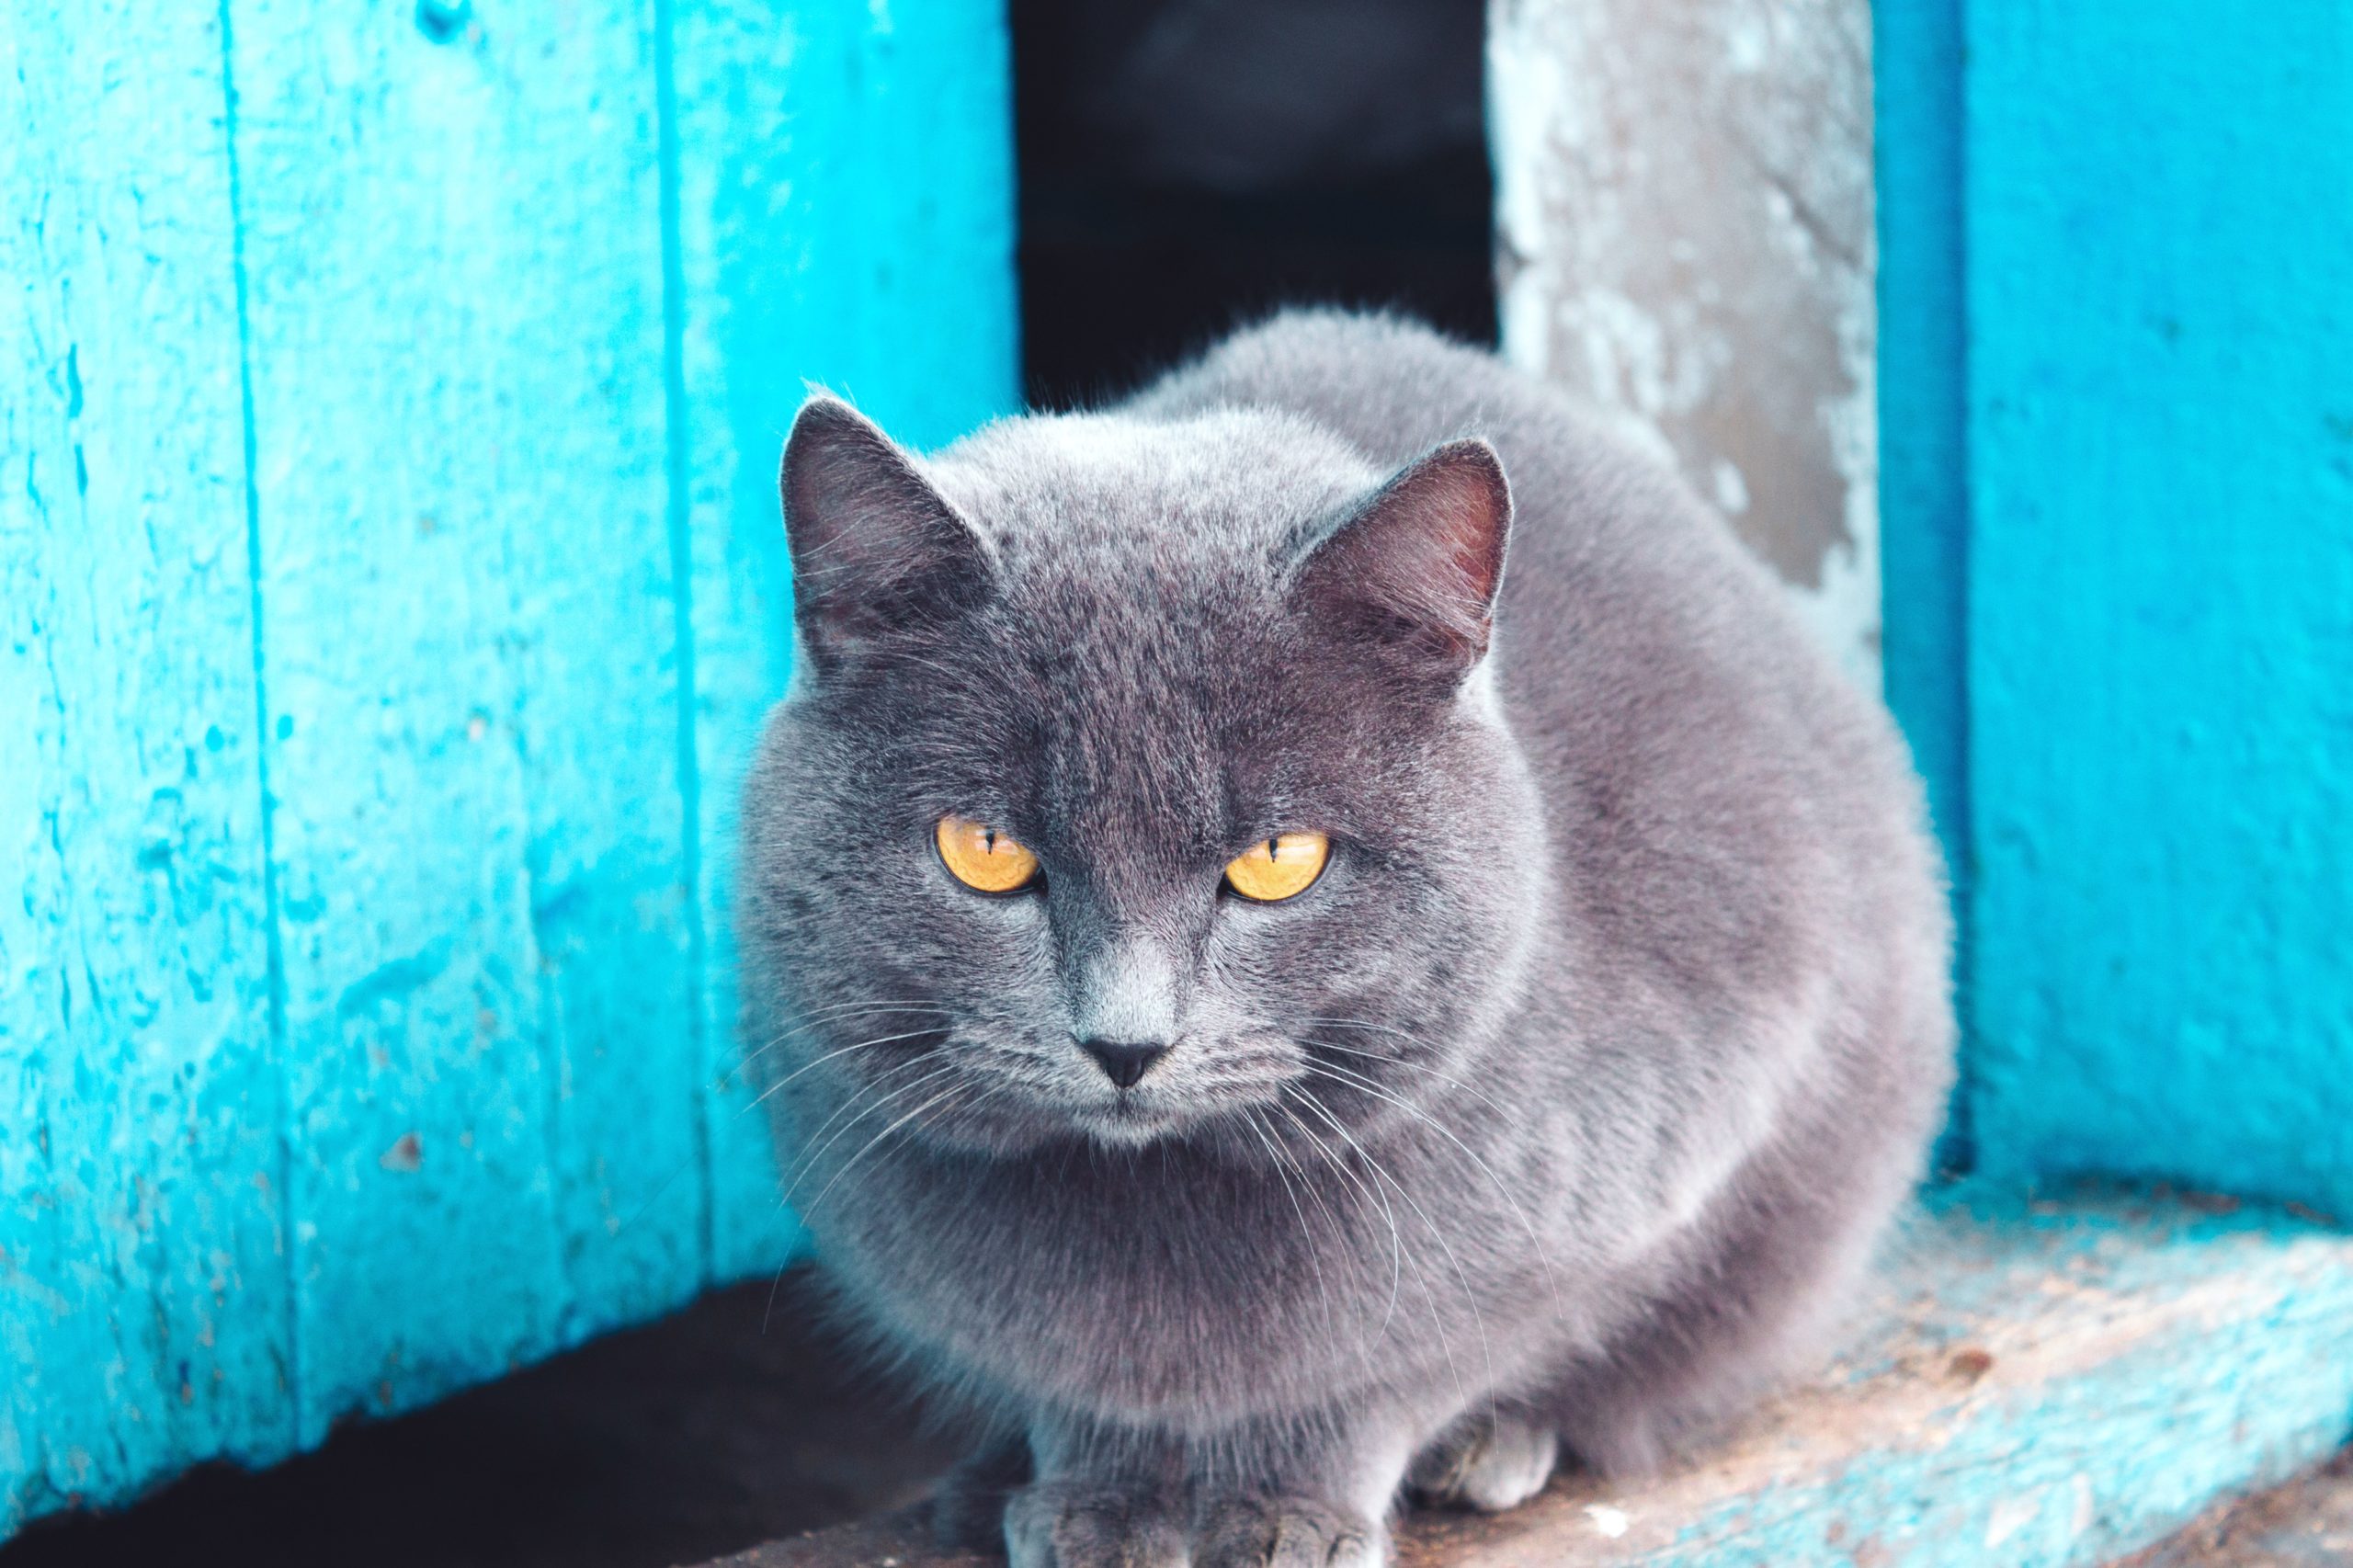 <img src="blue cat.jpg" alt="blue cat with yellow eyes"/> 